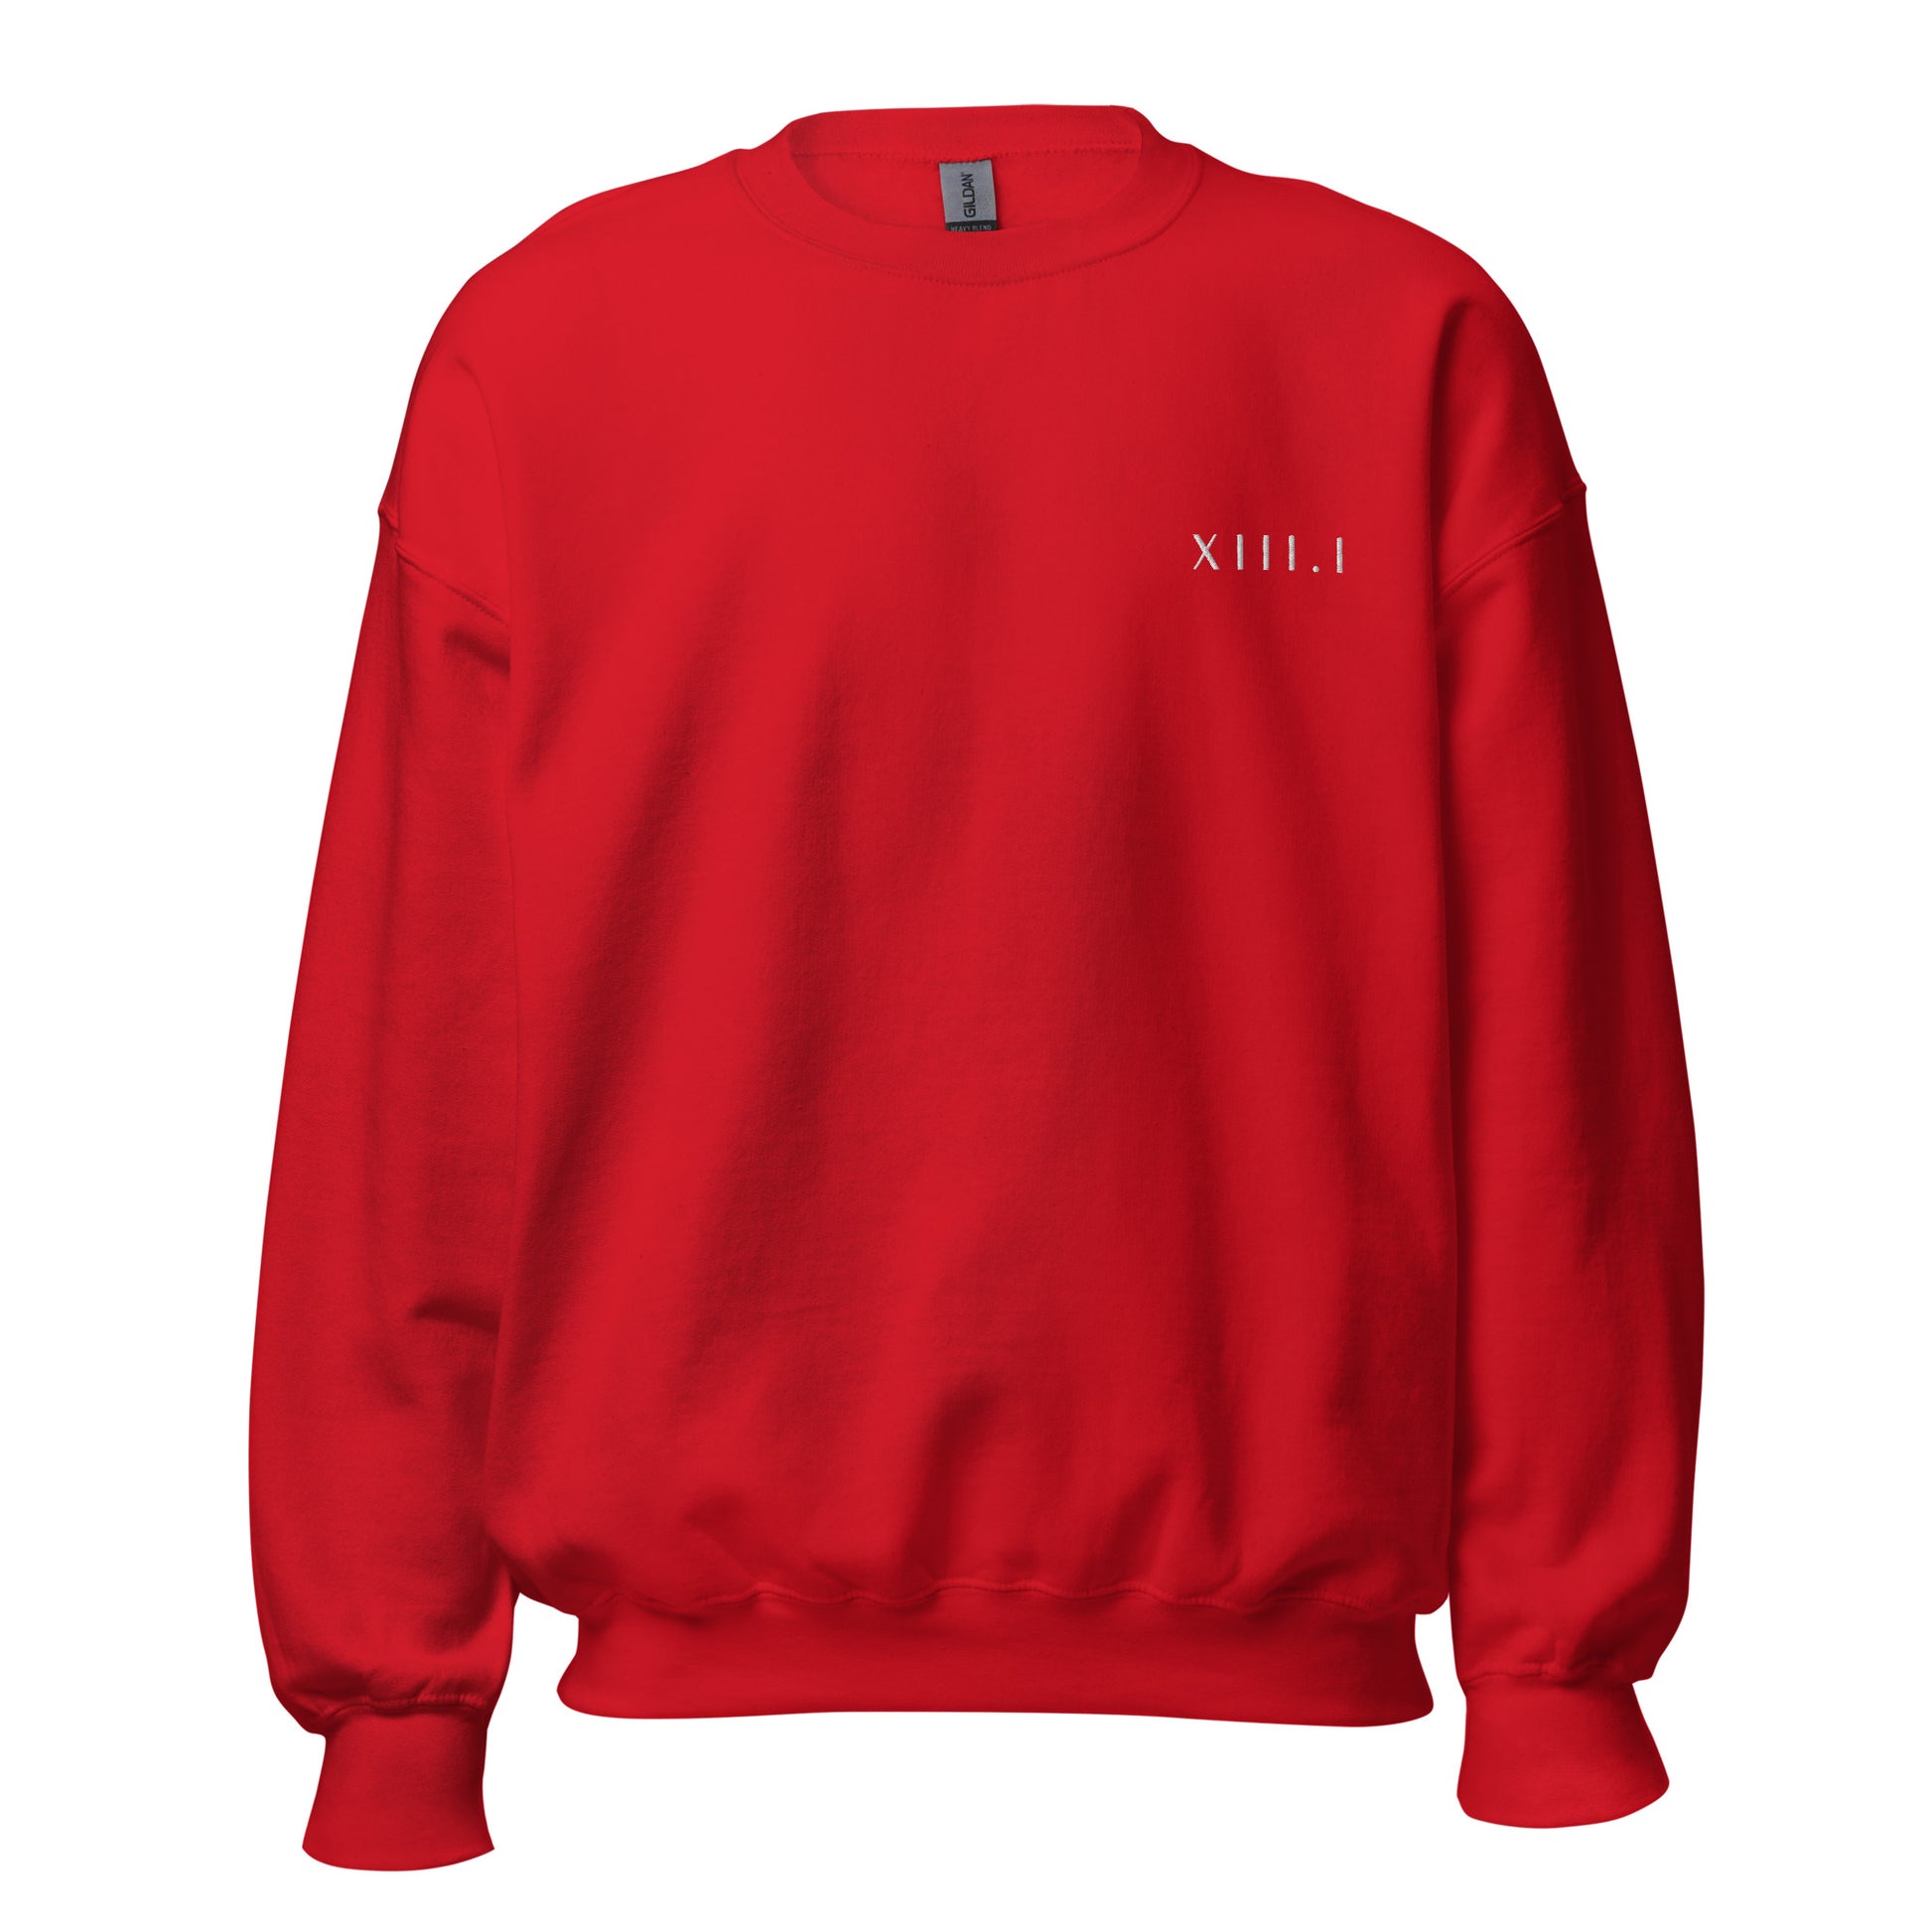 red unisex sweatshirt with XIII.I 13.1 half marathon in roman numerals embroidered in white writing